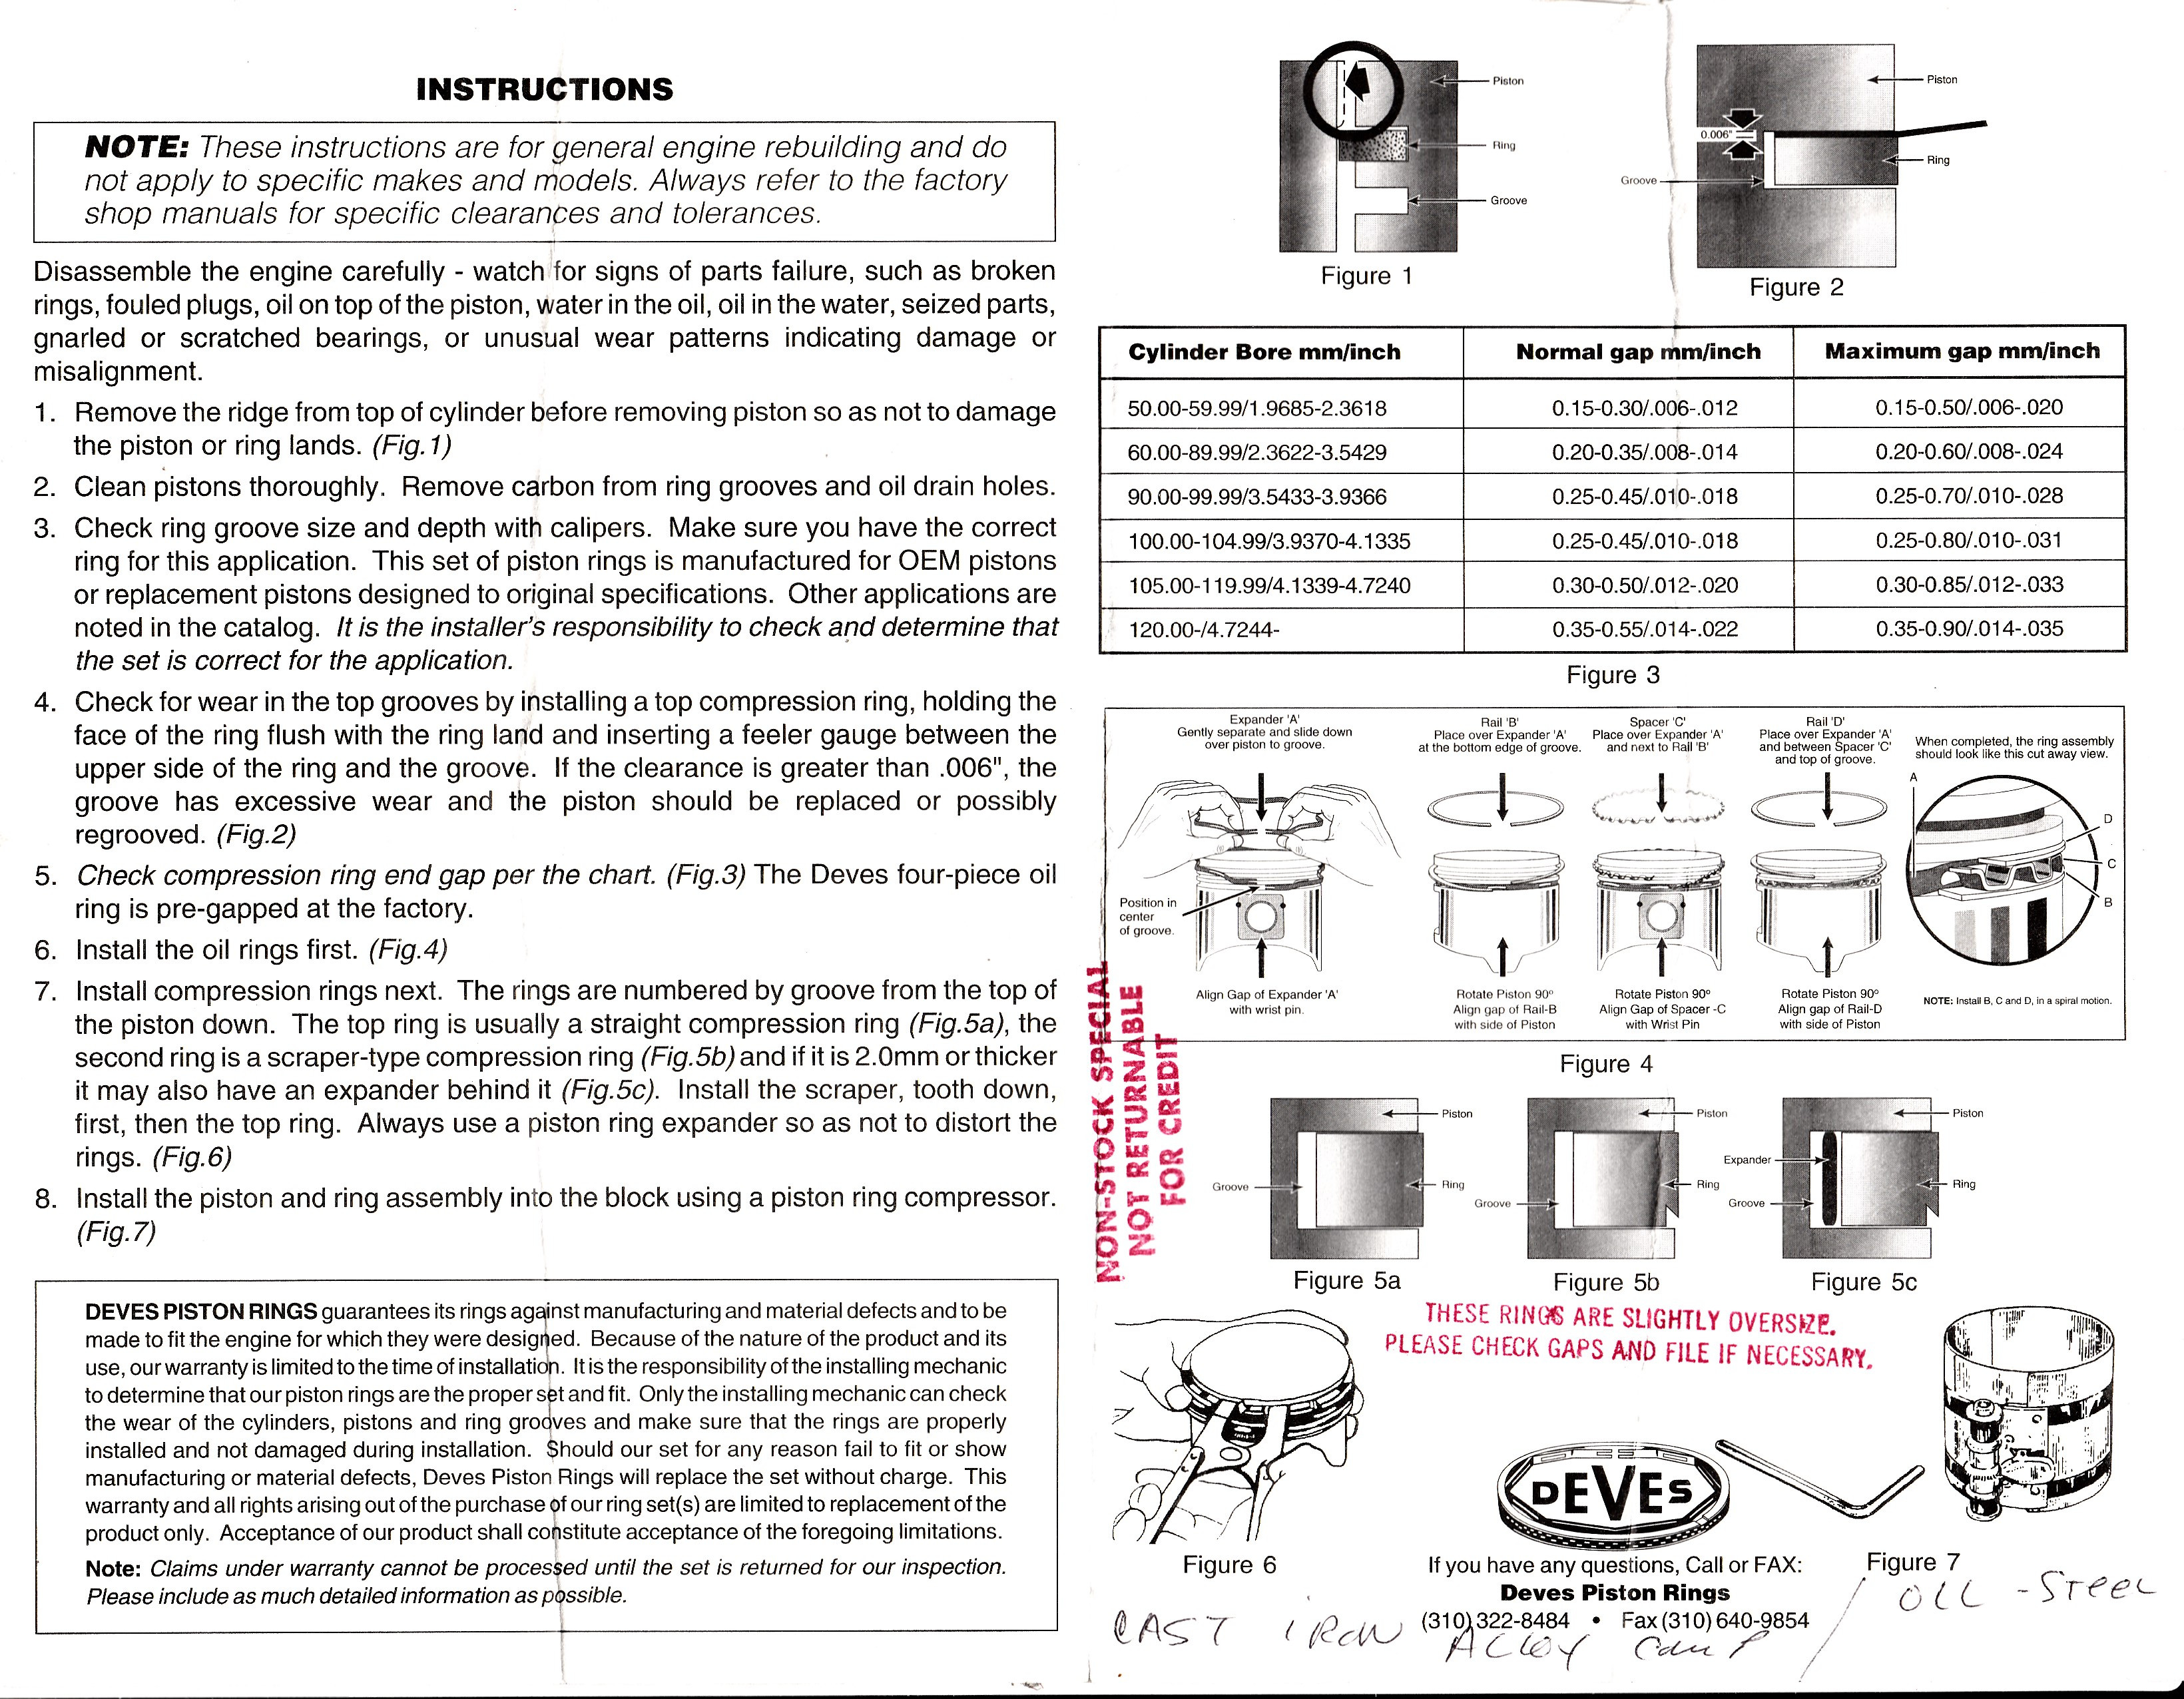 Installation instructions - Deves piston rings